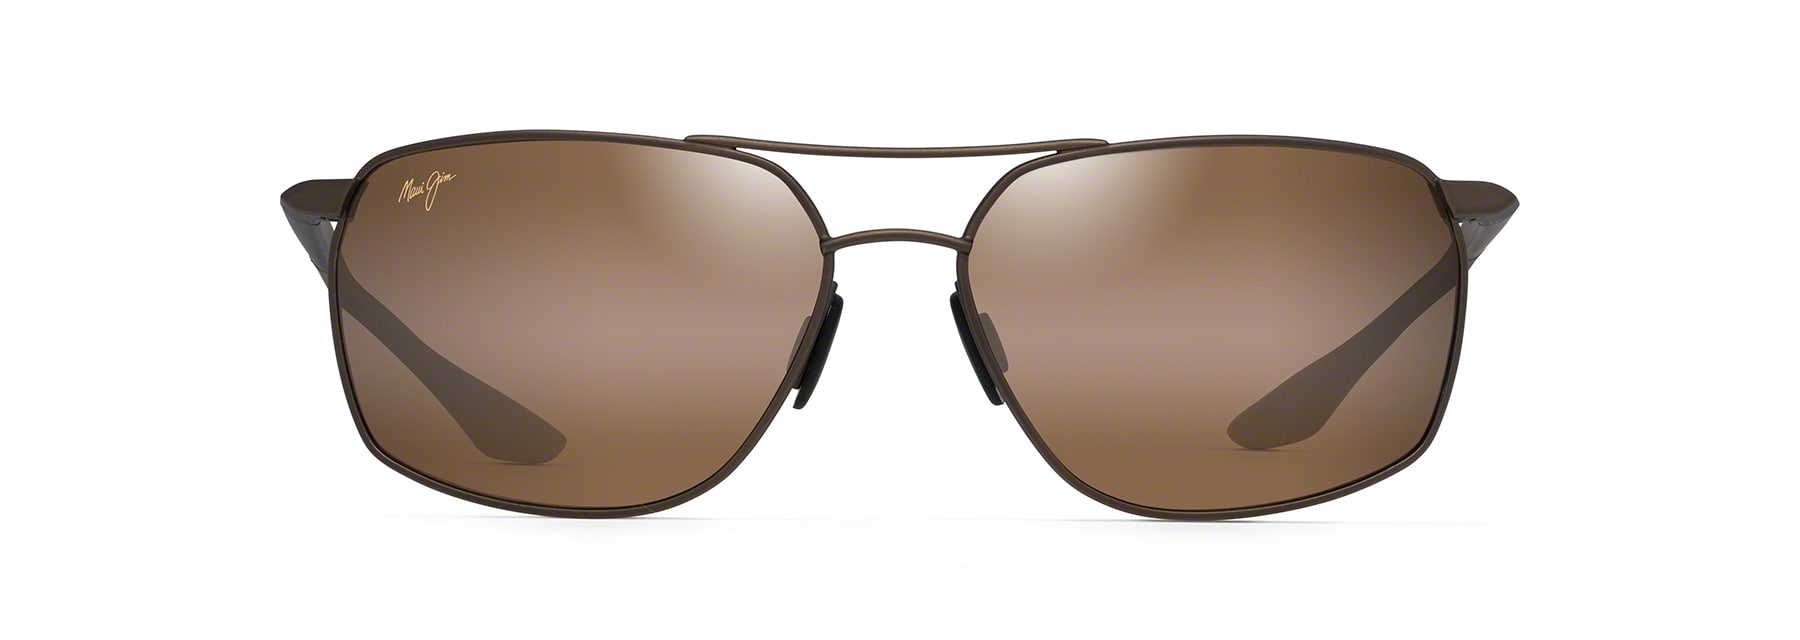 Pu'u Kukui Polarized Sunglasses | Maui Jim®